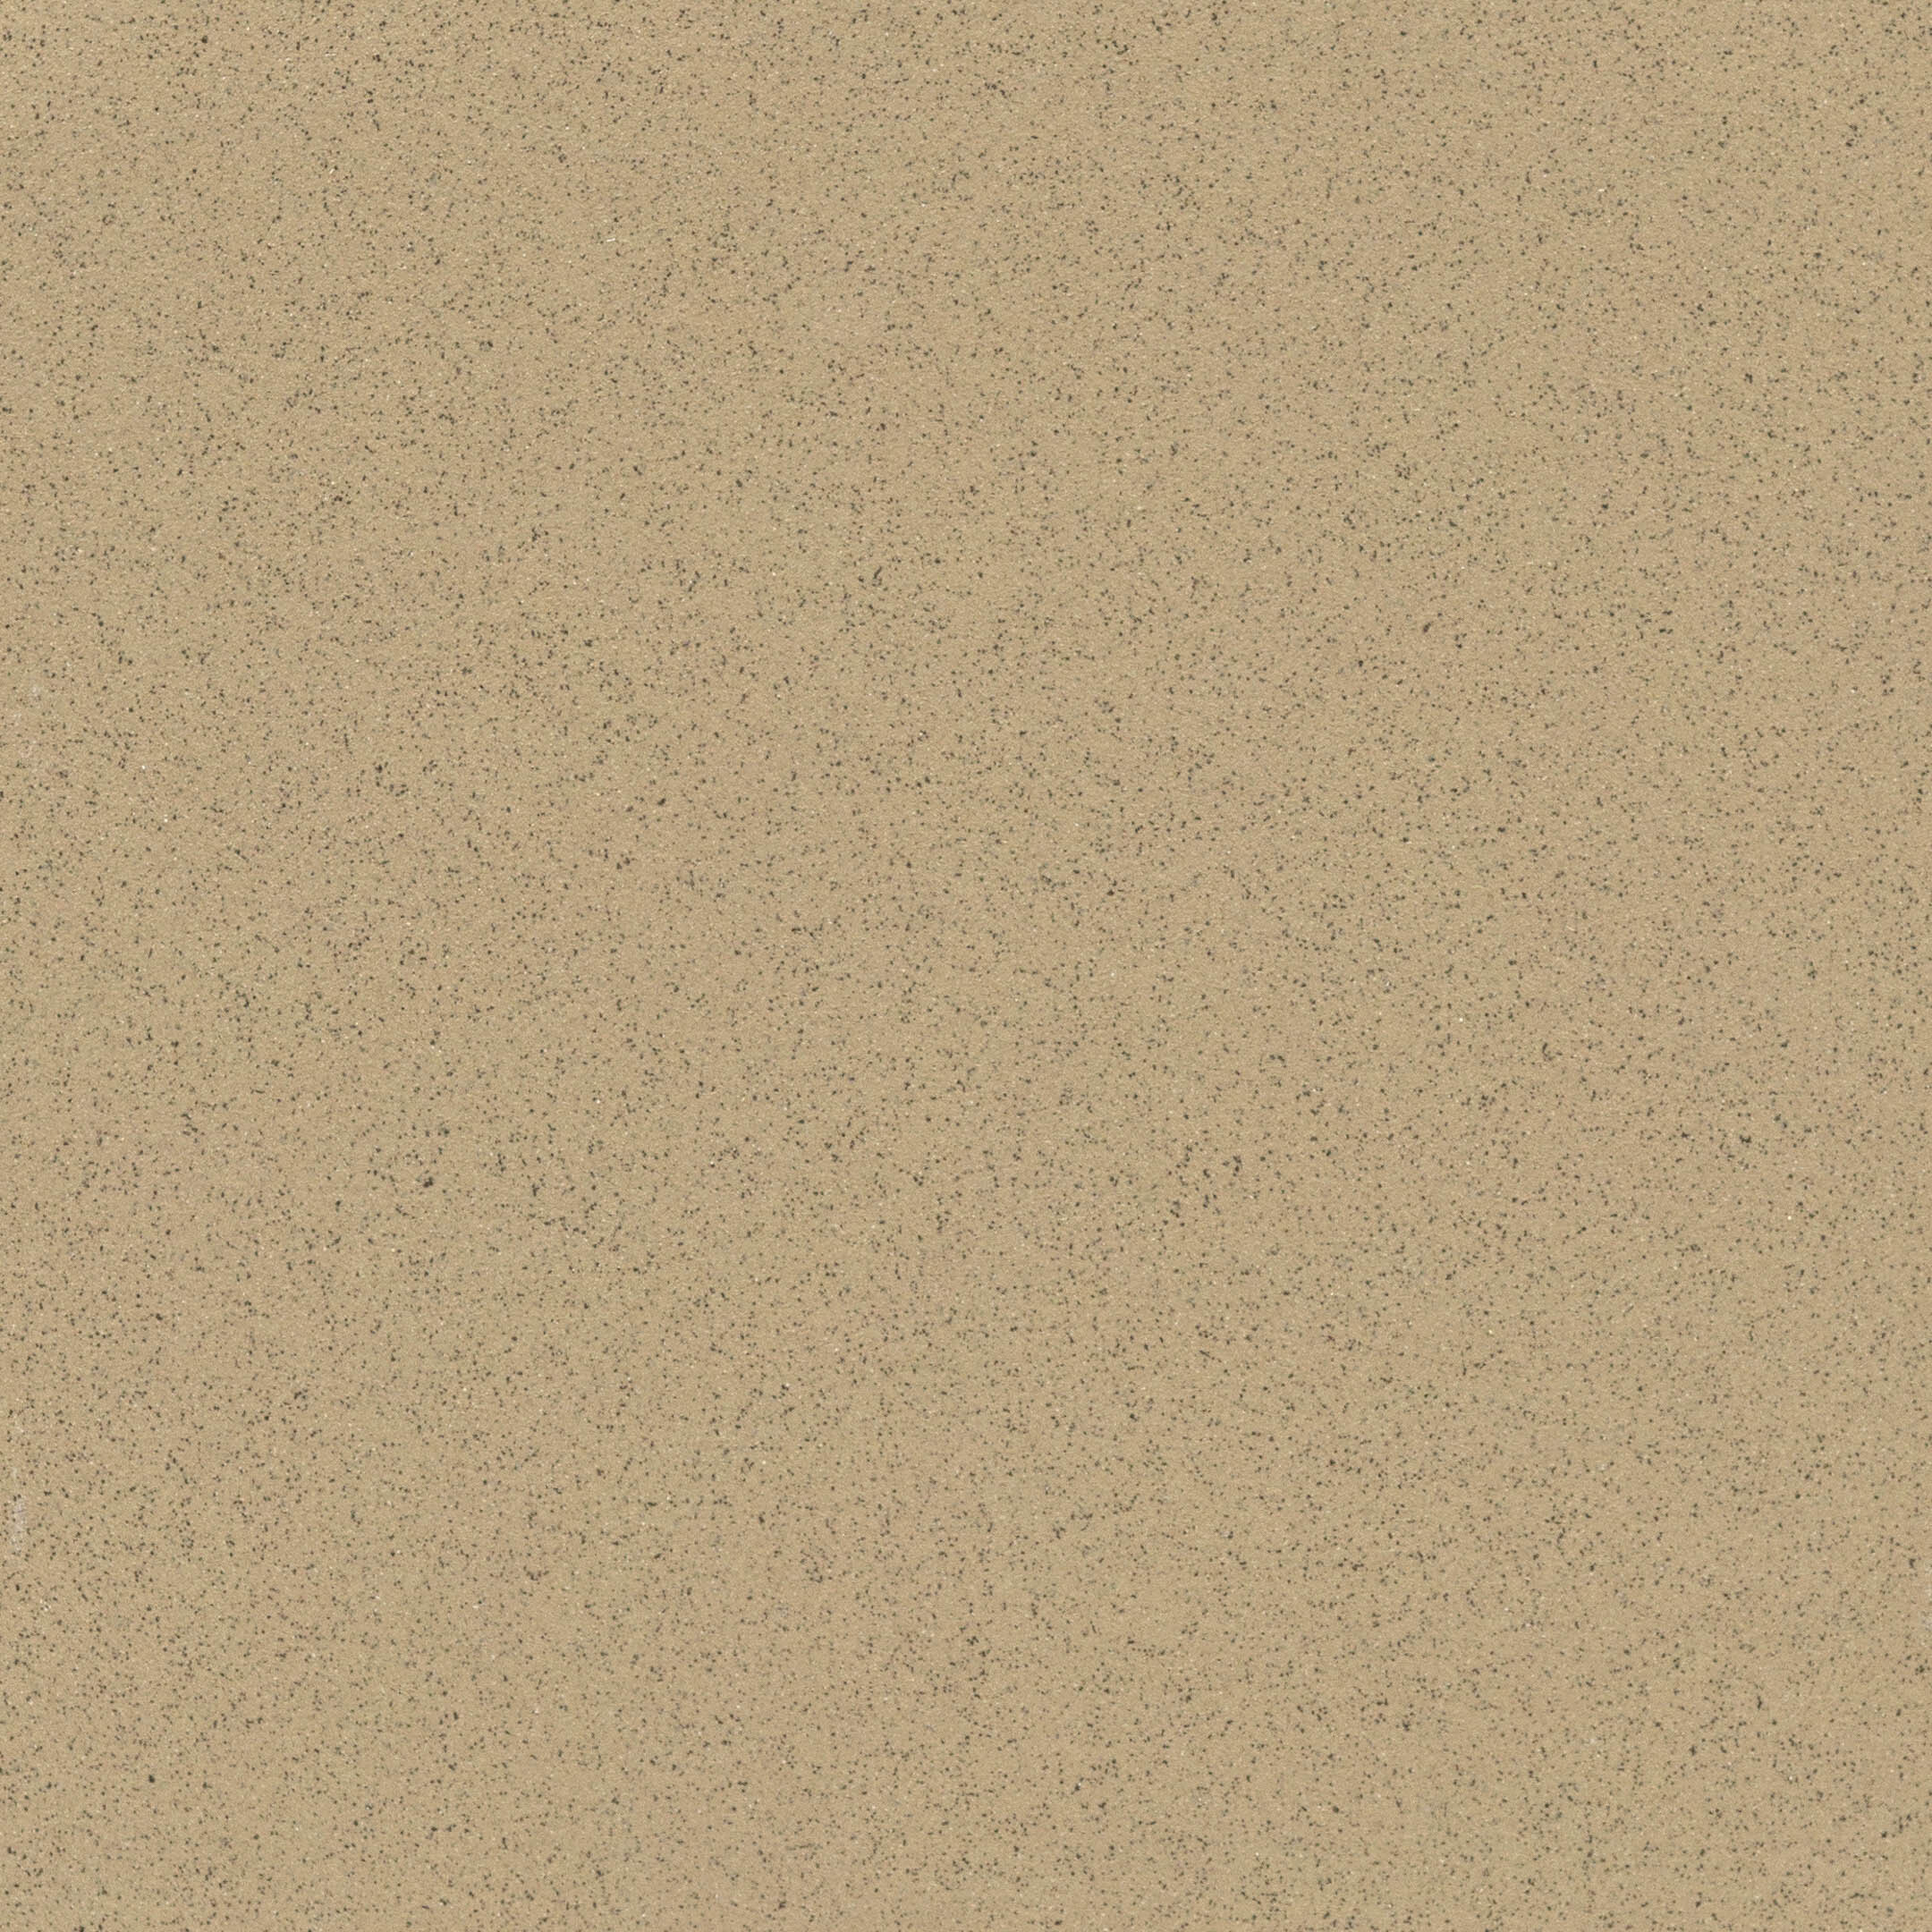 Керамогранит Quadro Decor Грес серый соль-перец 300х300х7 мм (17 шт.=1,53 кв.м) керамогранит quadro decor соль перец 30x30 см 1 44 м2 неполированный цвет серый